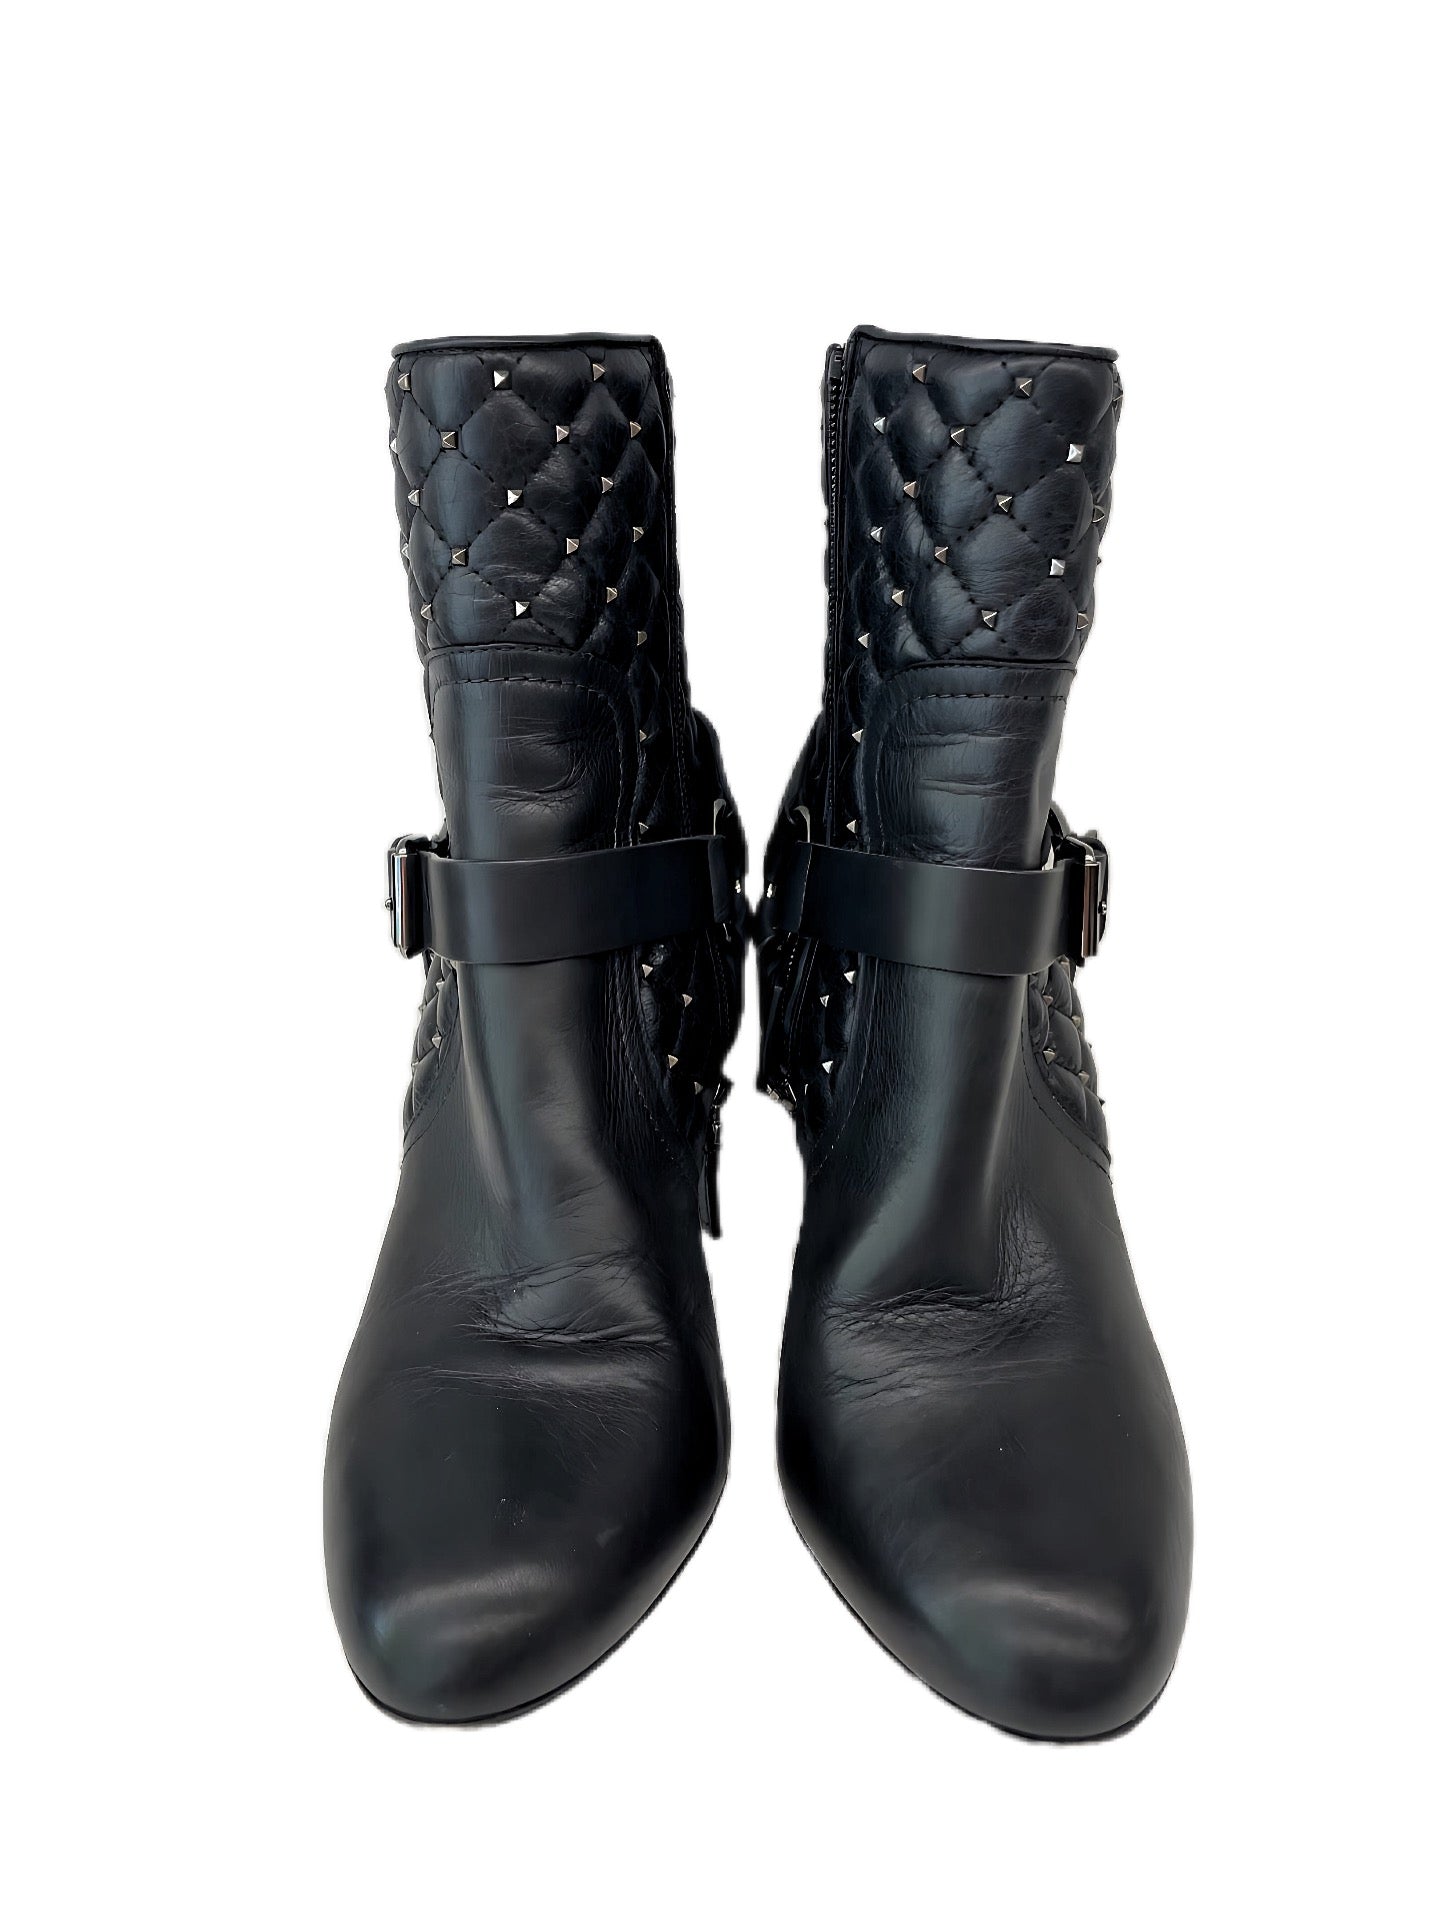 Valentino Garavani Black Heeled Boots w Ankle Buckle. Size: 38